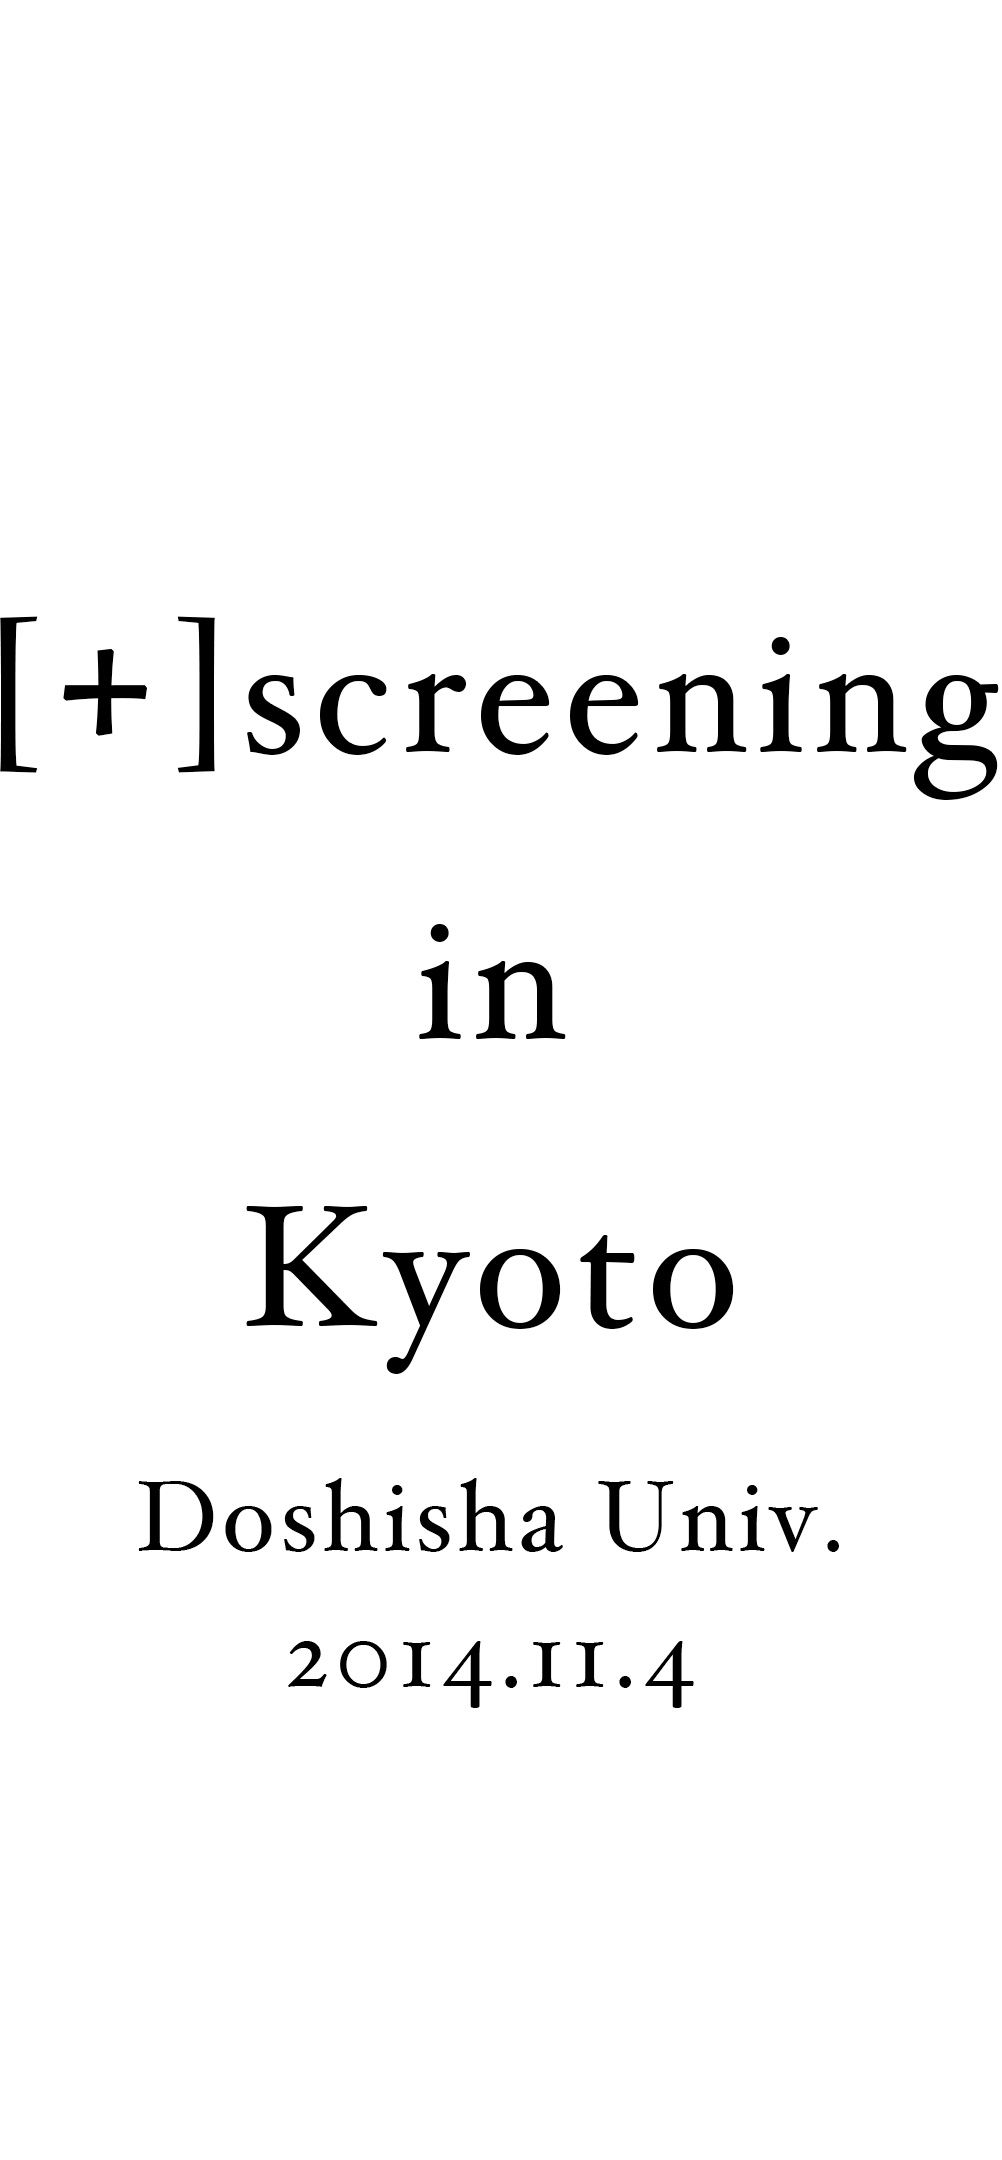 [+]screening in kyoto doshisha Univ. 2014.11.4 / 実験映画上映ツアー、京都編